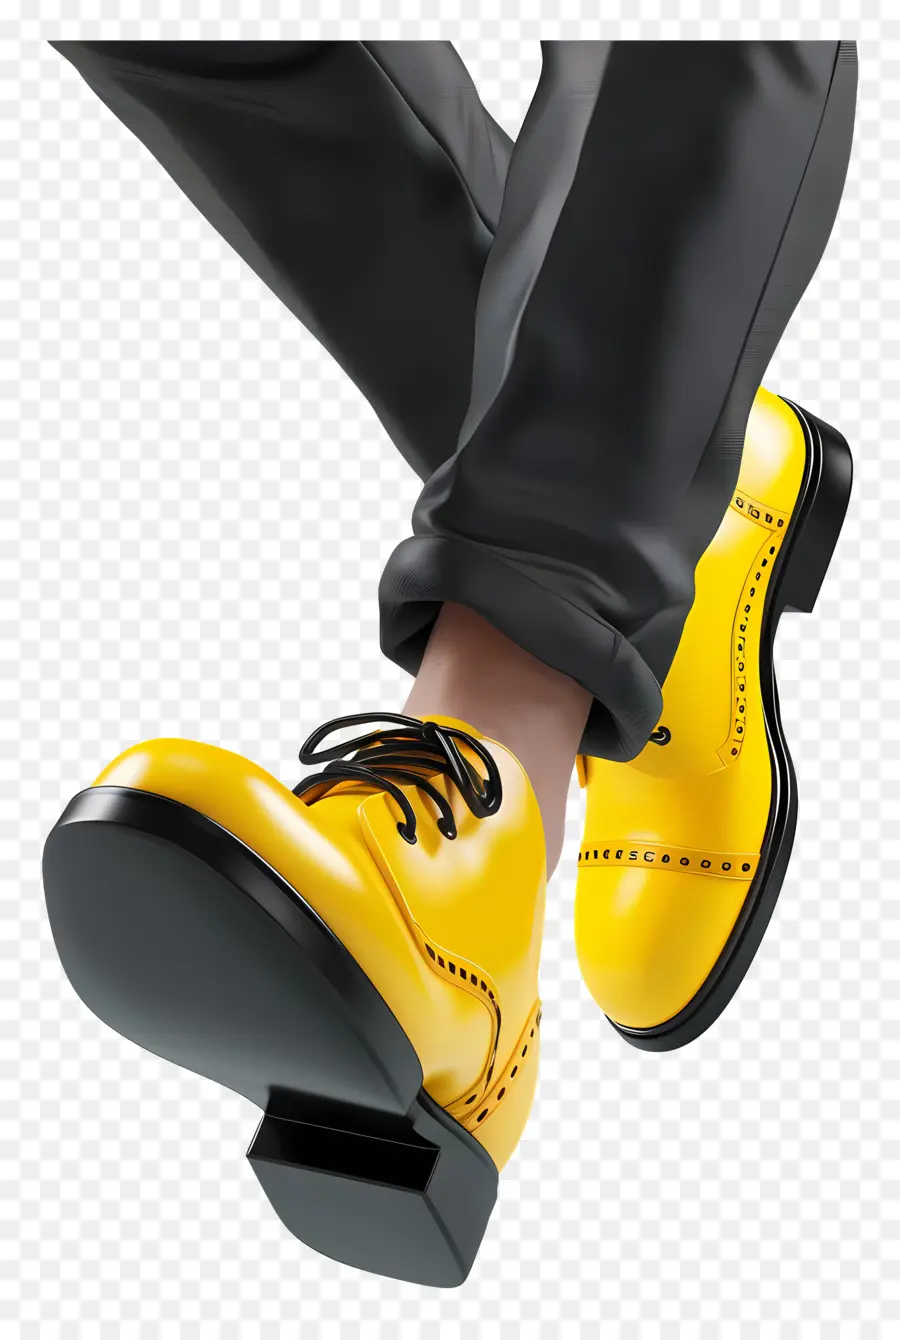 tap dance day yellow leather shoes open toe shoes black pants elegant dress shoes